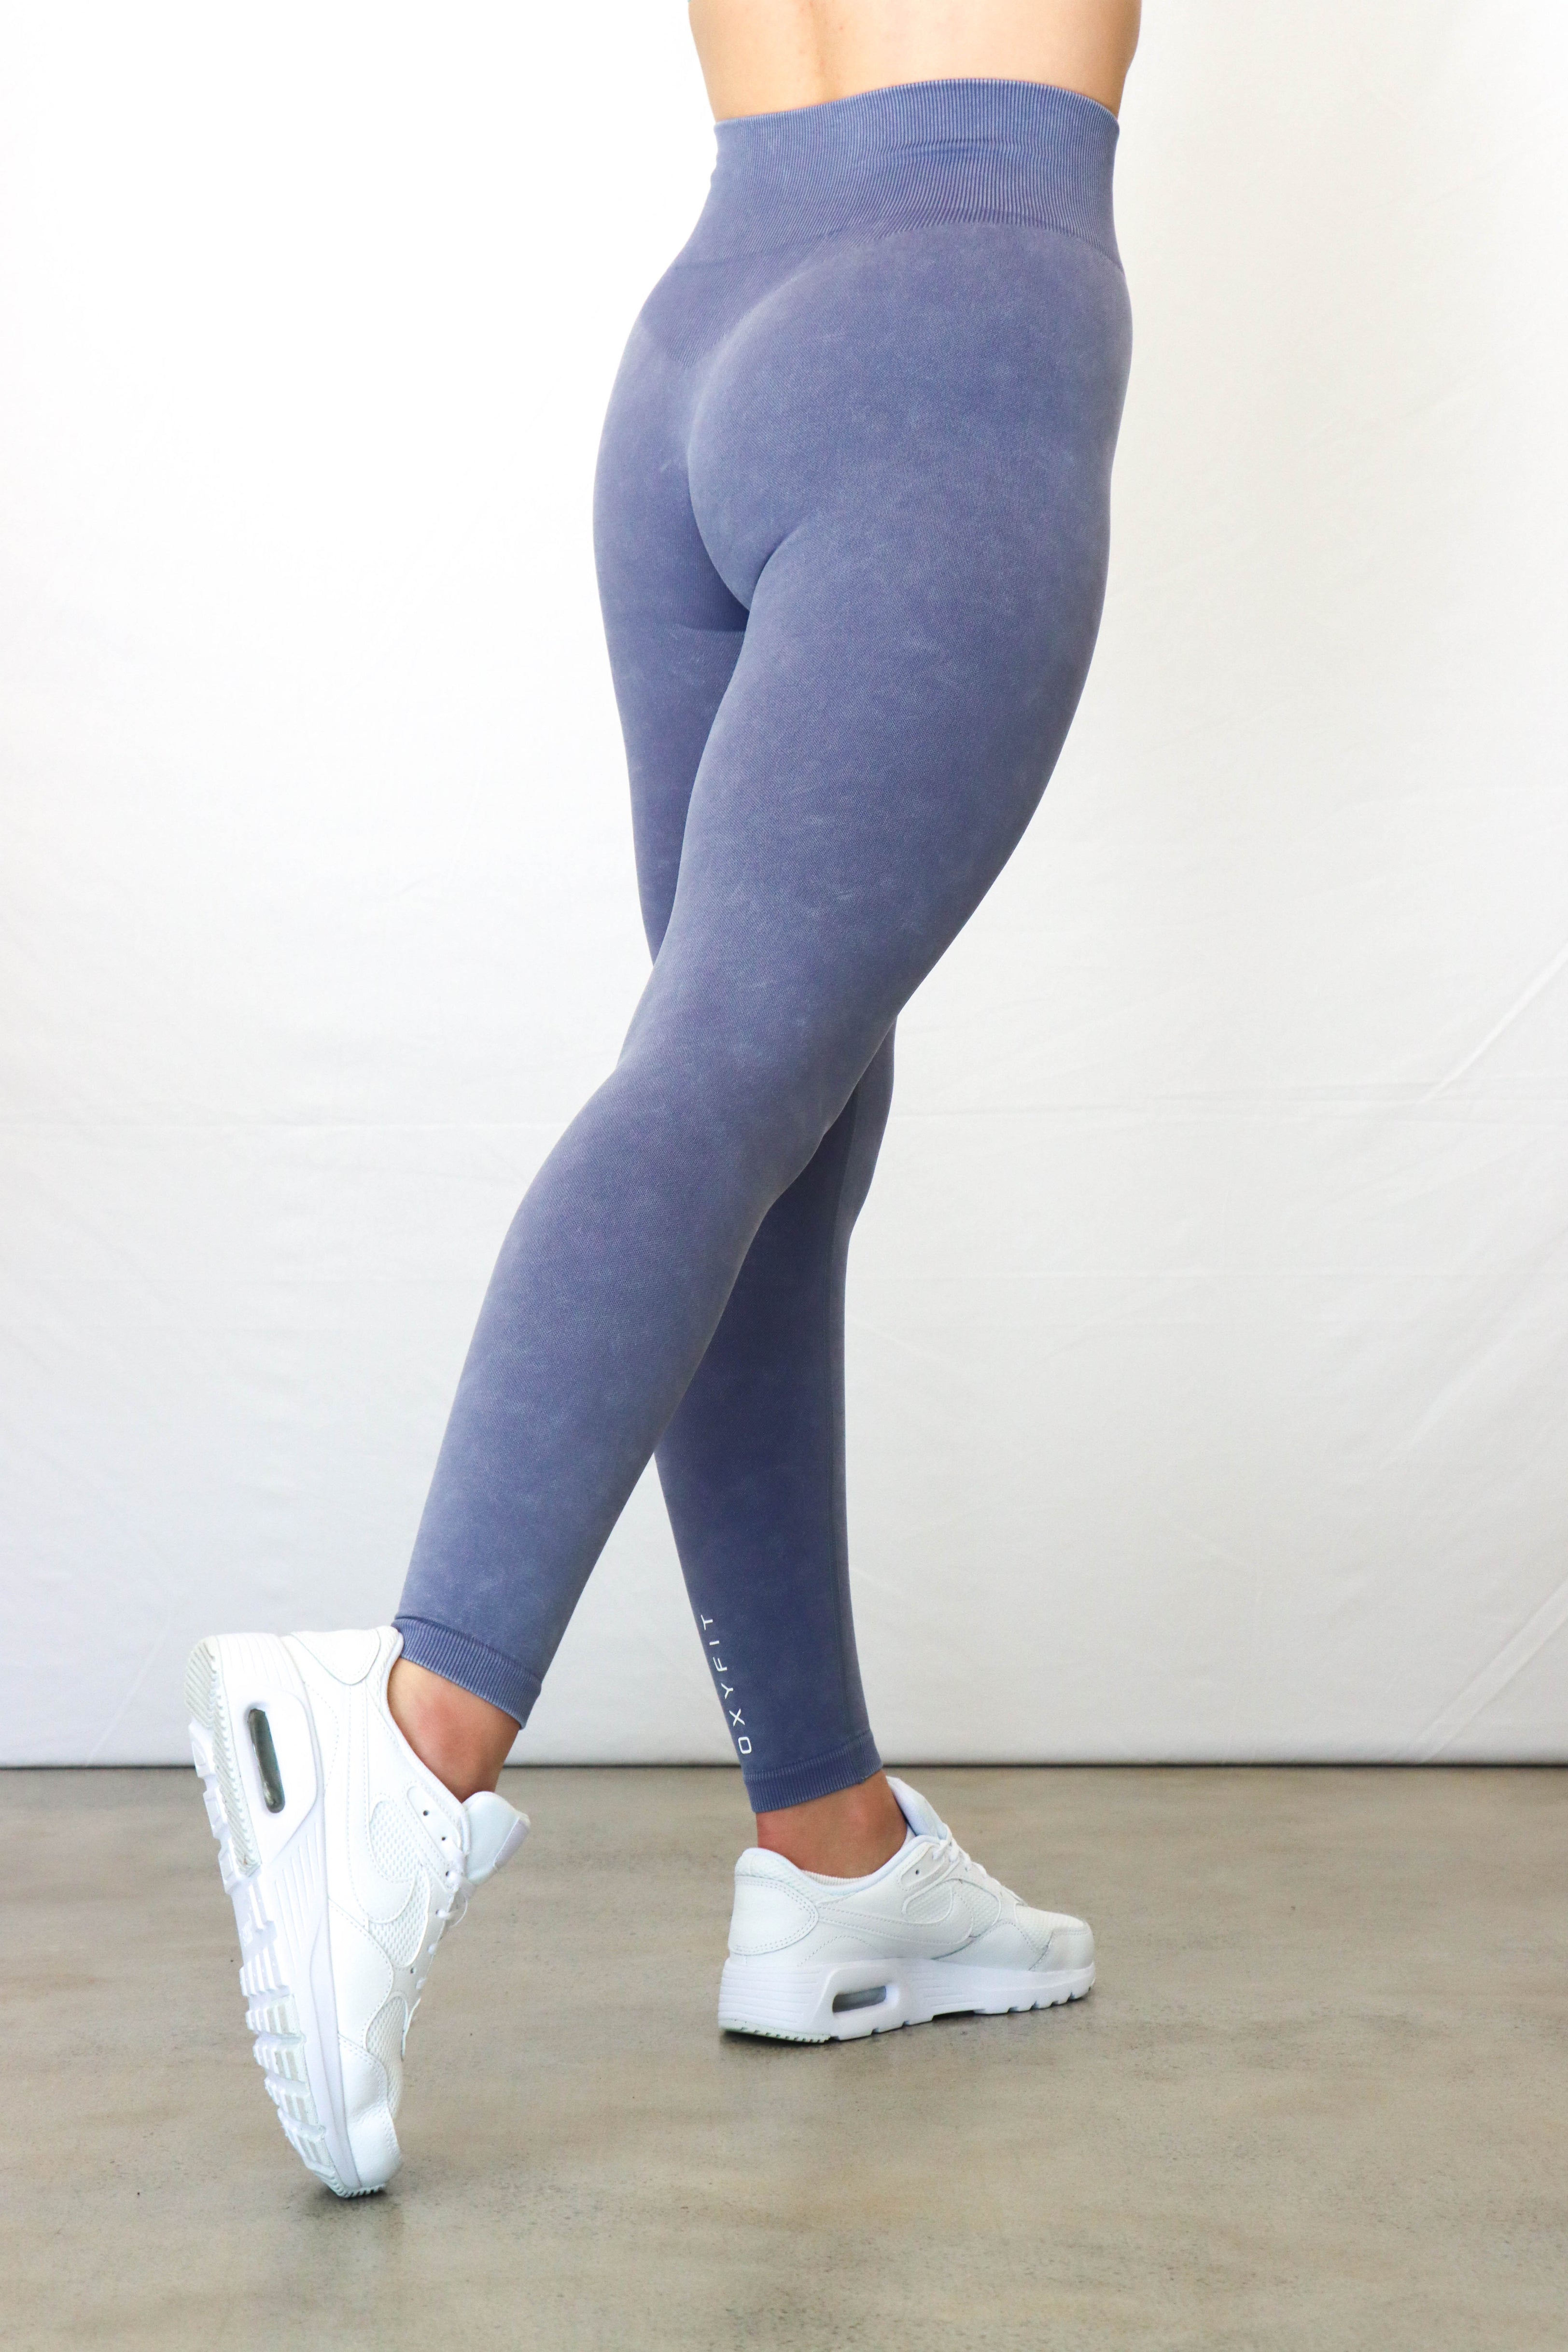 Oxyfit Women's Stealth Leggings, Black Squat Proof Gym Tights